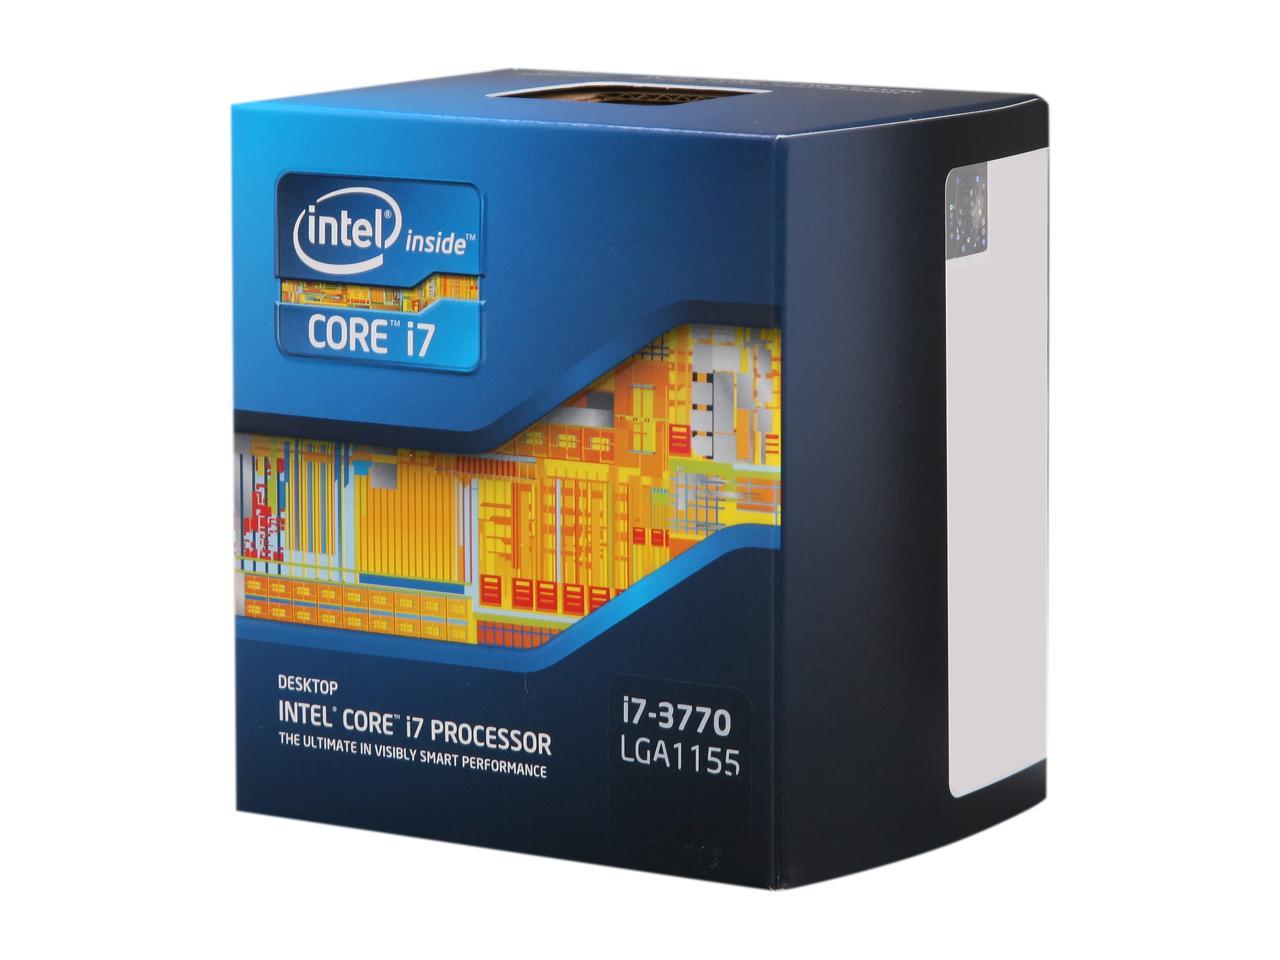 Intel Core i7-3770 3.4GHz (Turbo) LGA 1155 Desktop Processor - Newegg.com